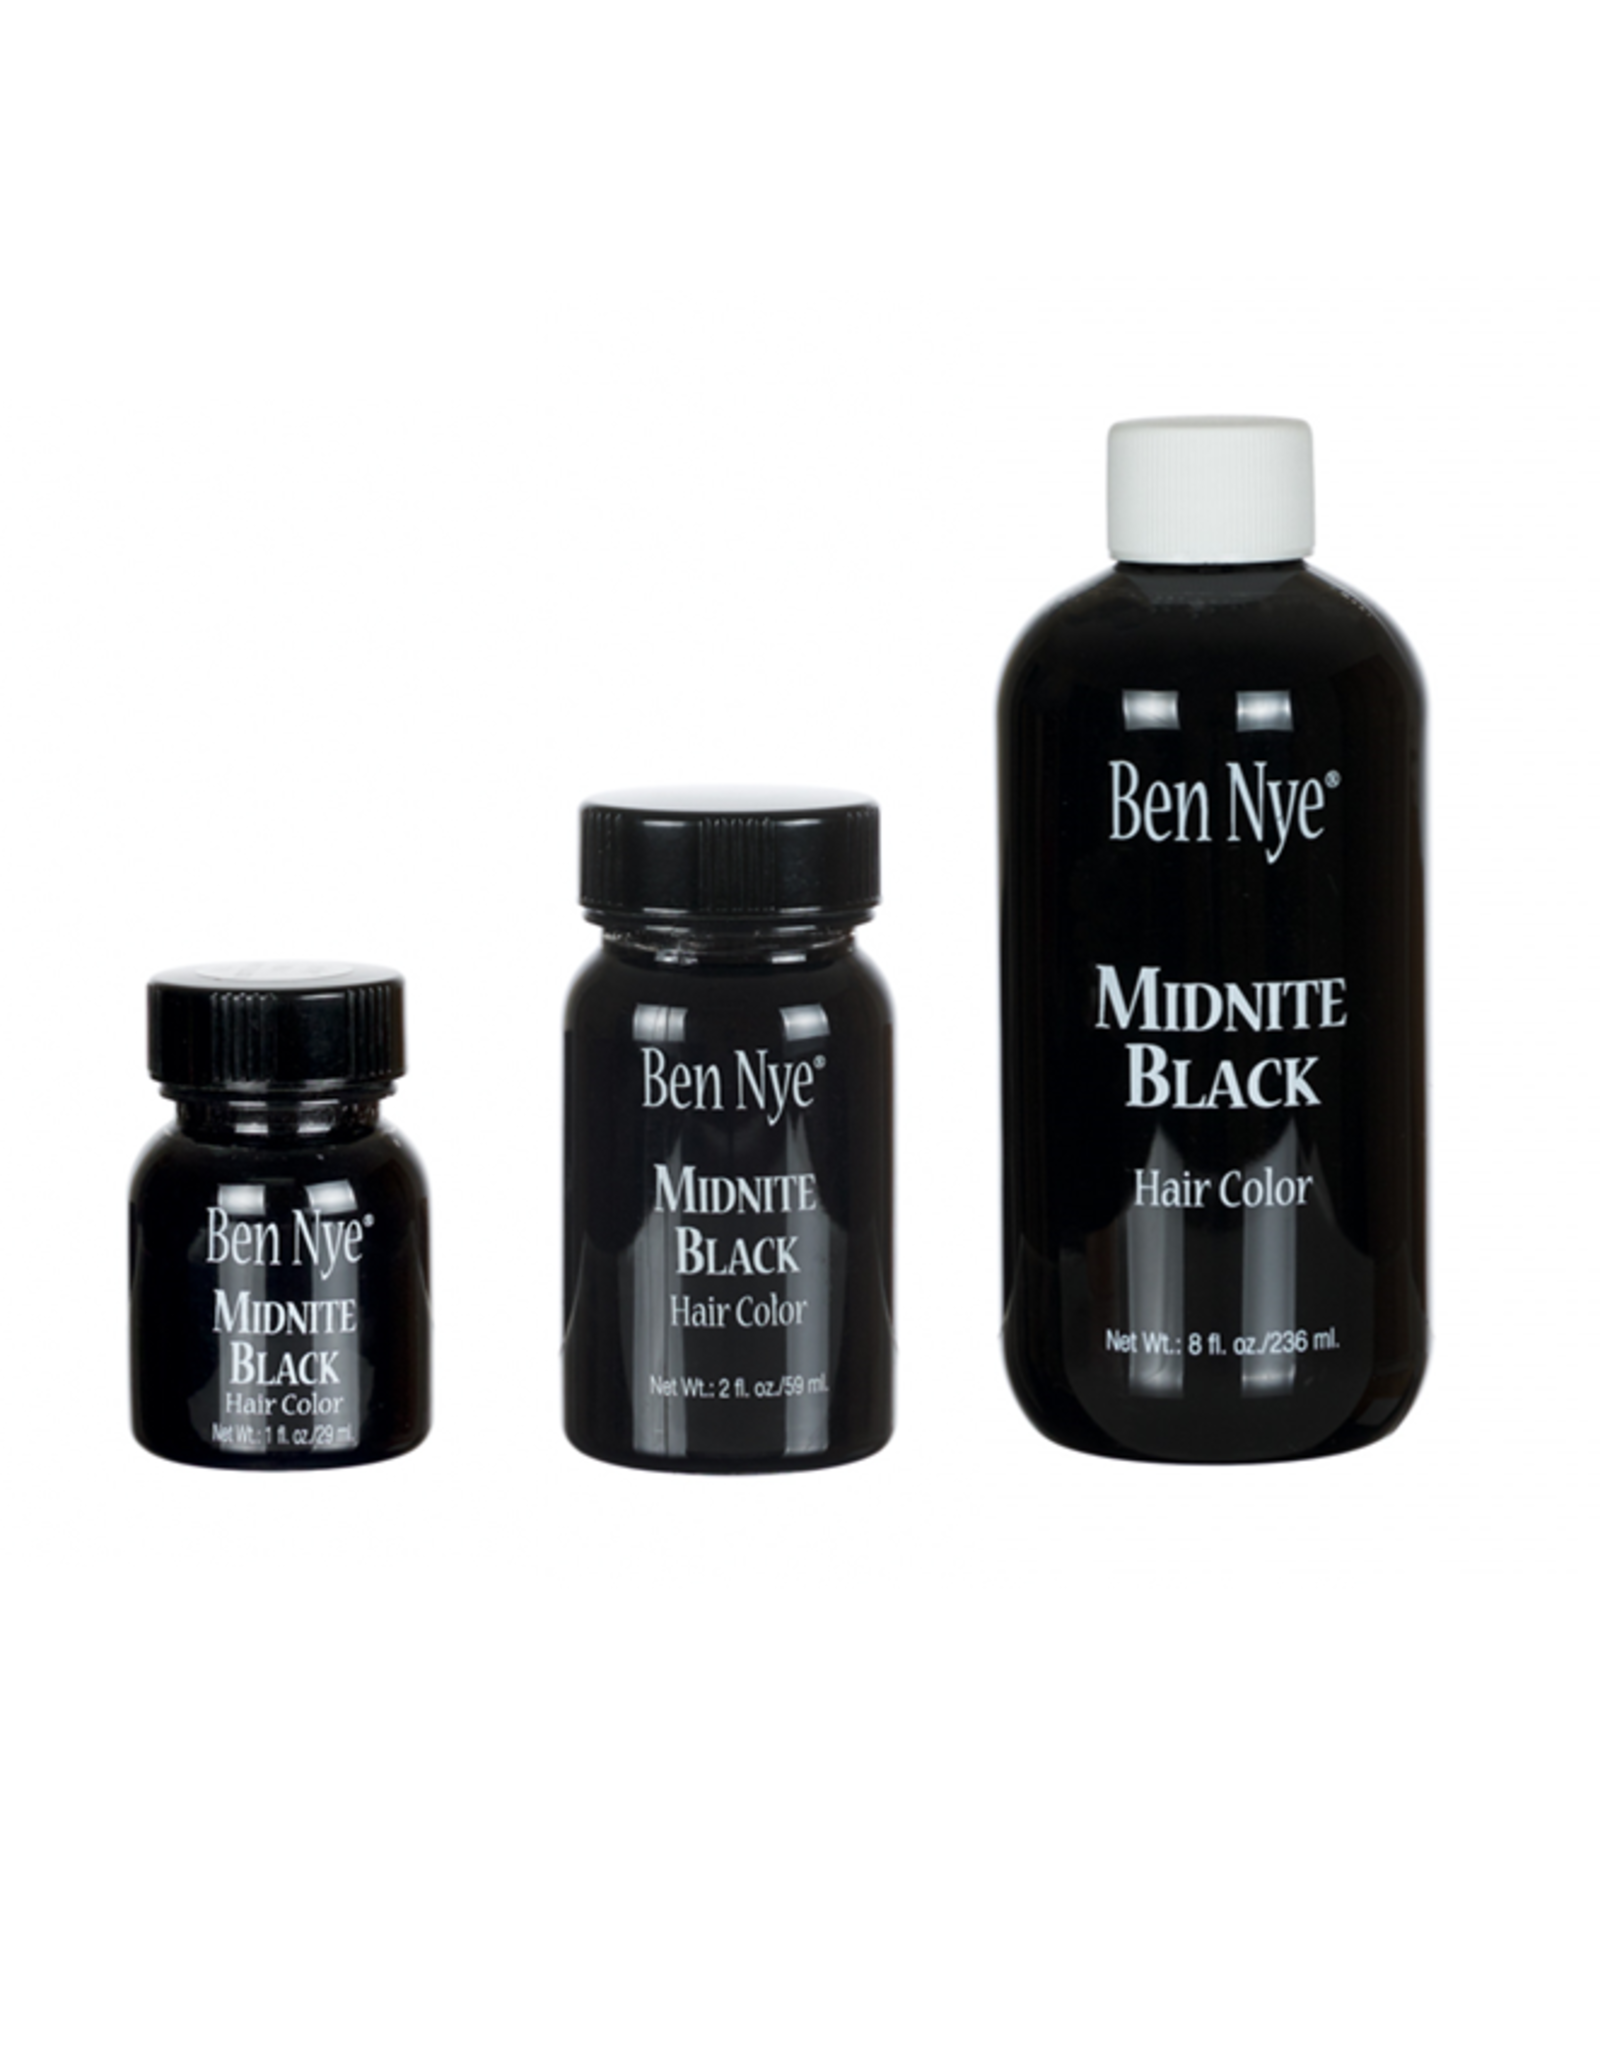 Ben Nye Ben Nye Midnite Black Hair Color